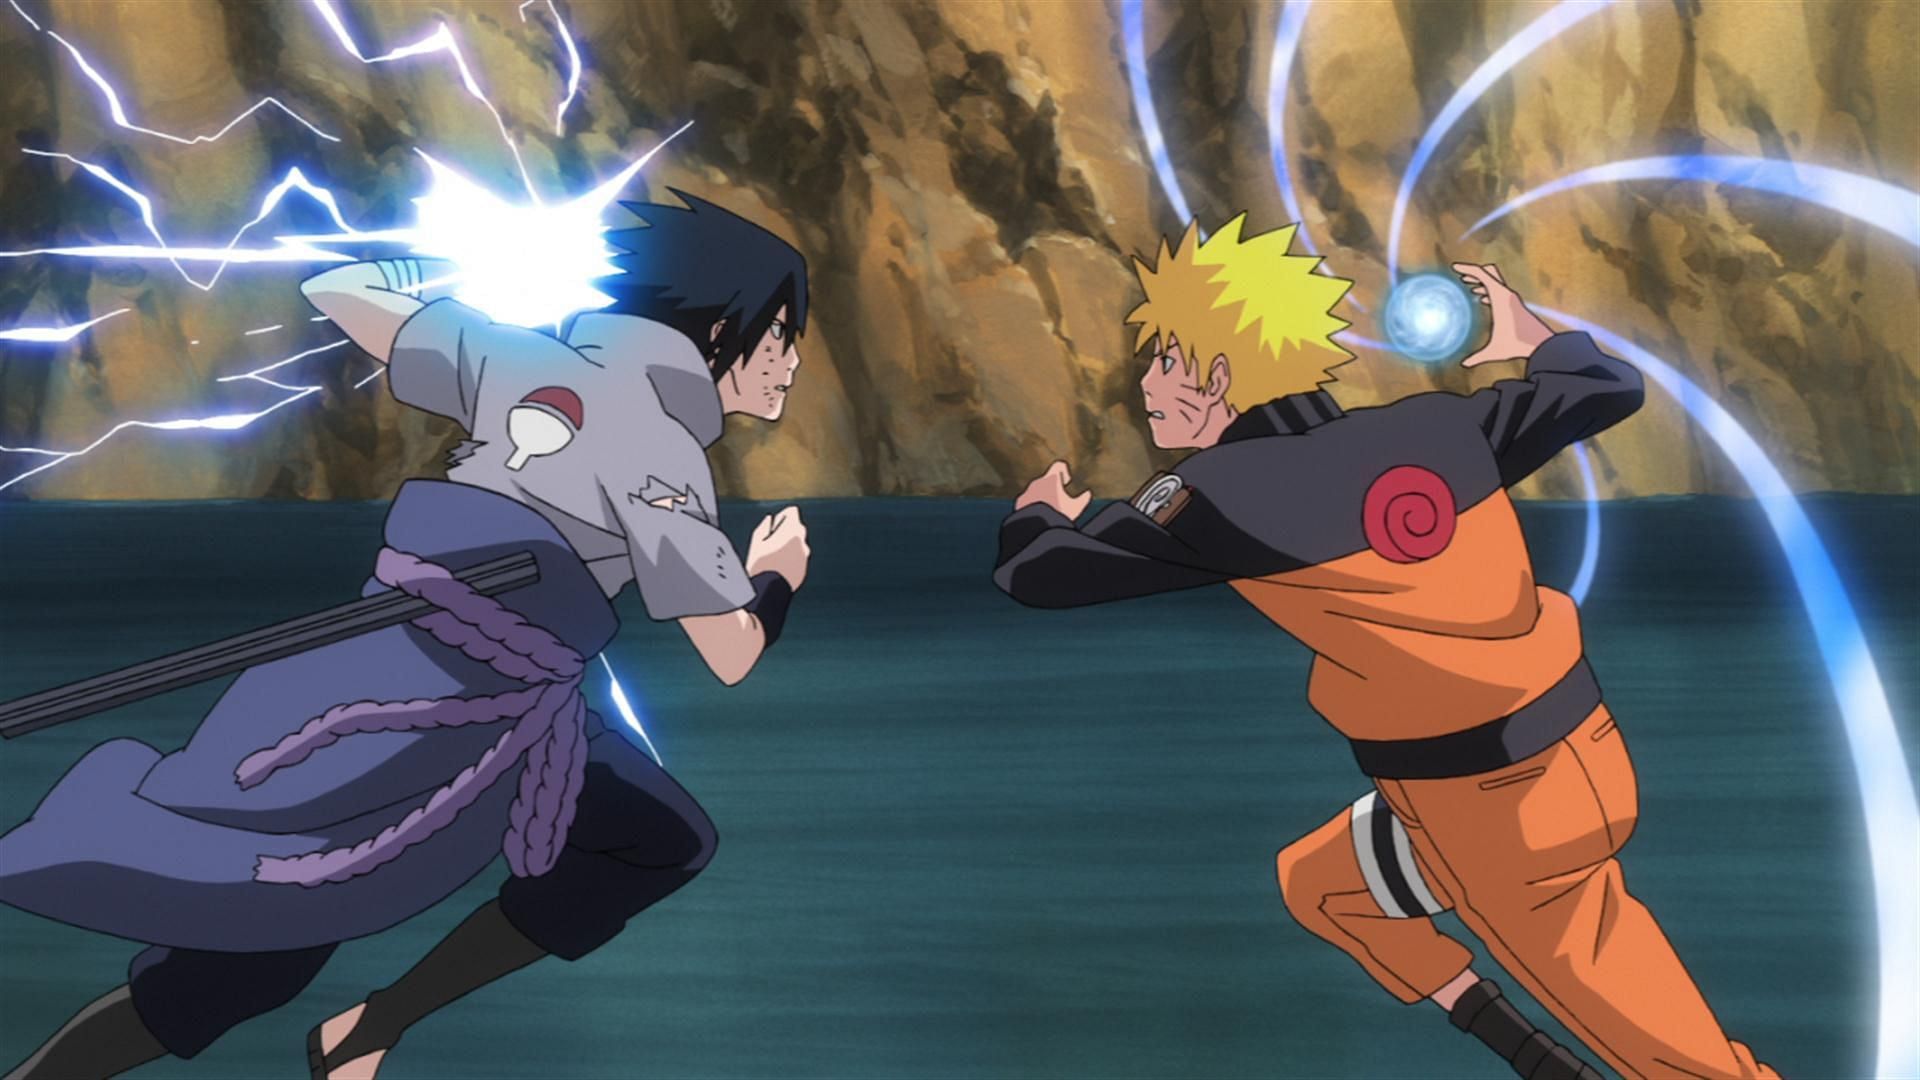 Sasuke and Naruto as shown in the series (Image via Studio Pierrot)